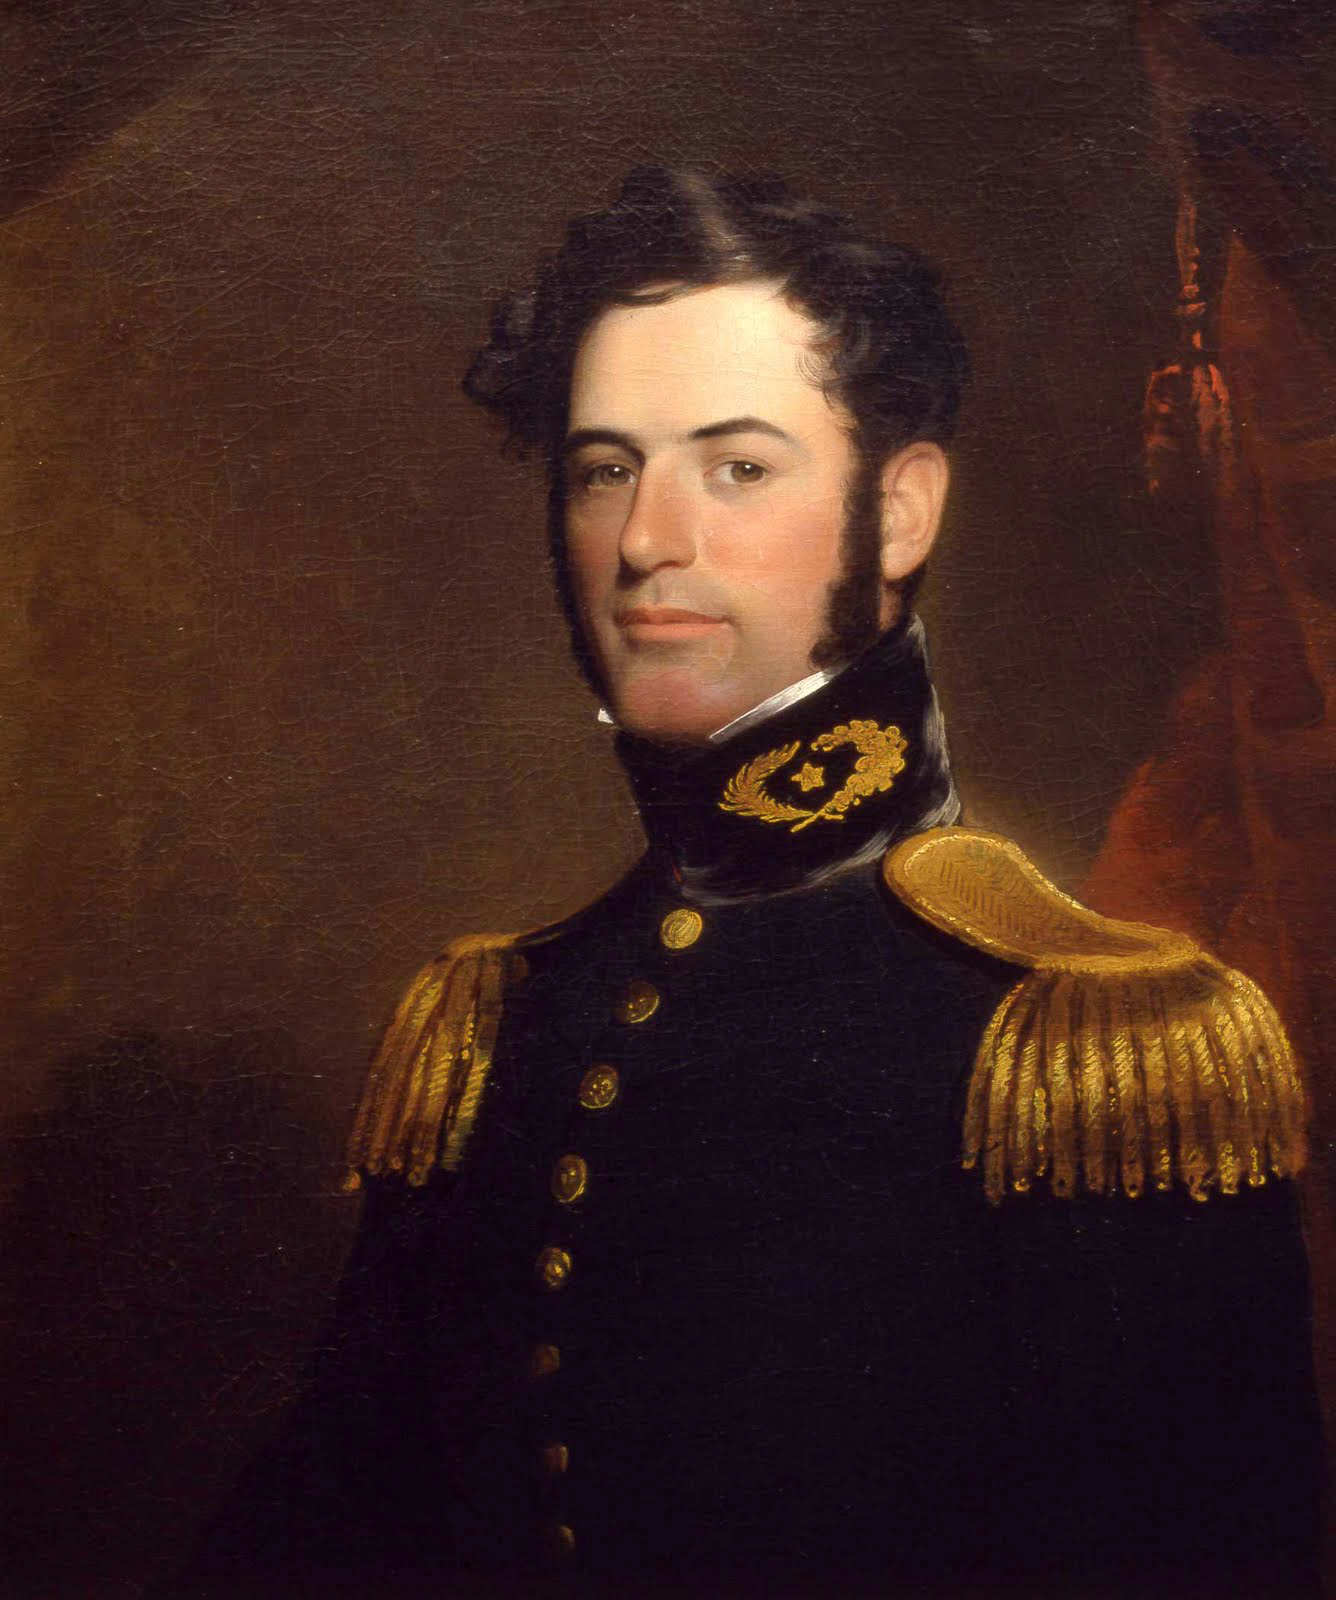 portrait of Robert E. Lee